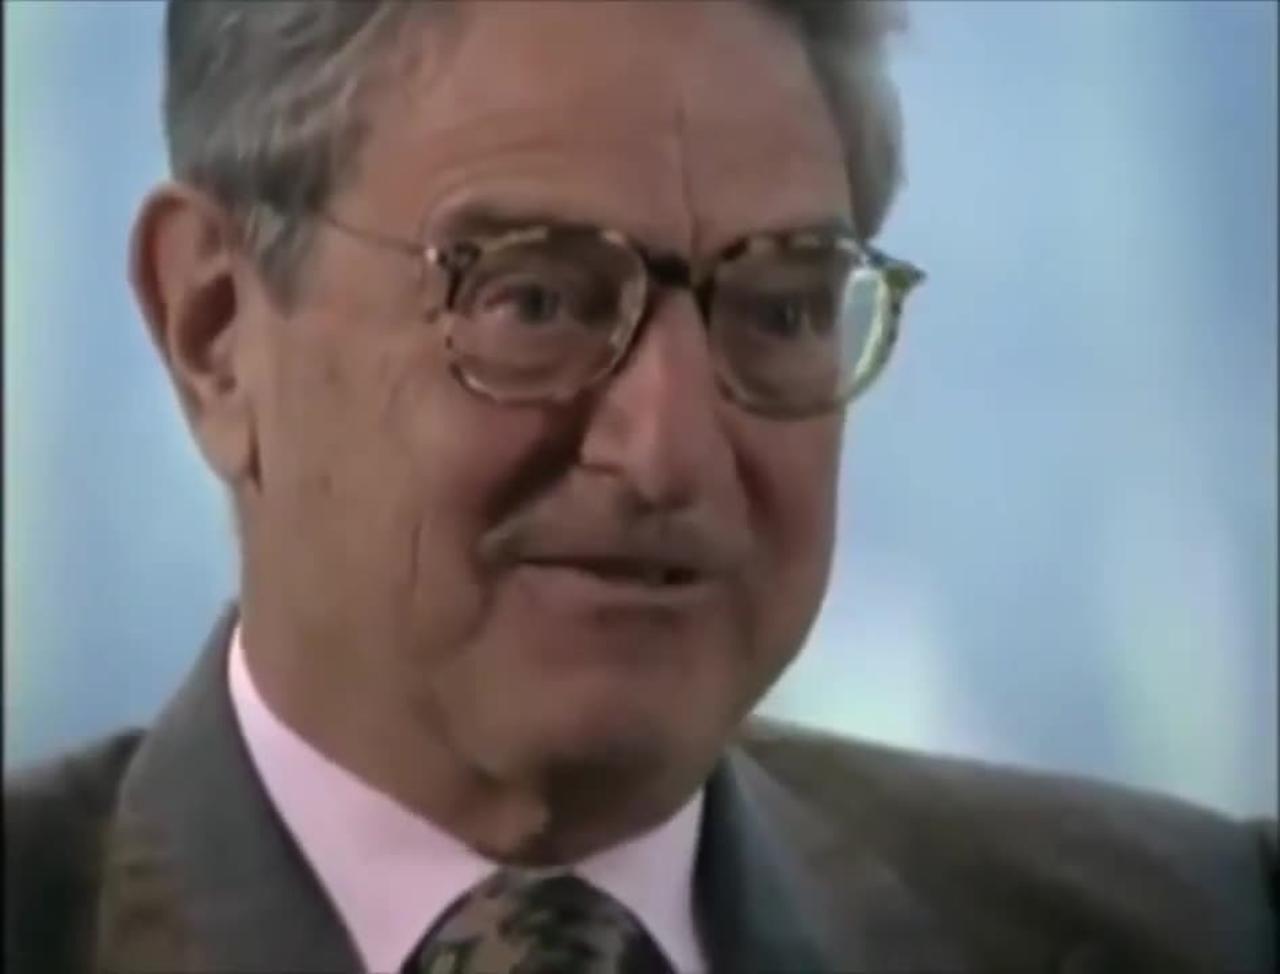 George Soros 1998 60 Minutes Interview